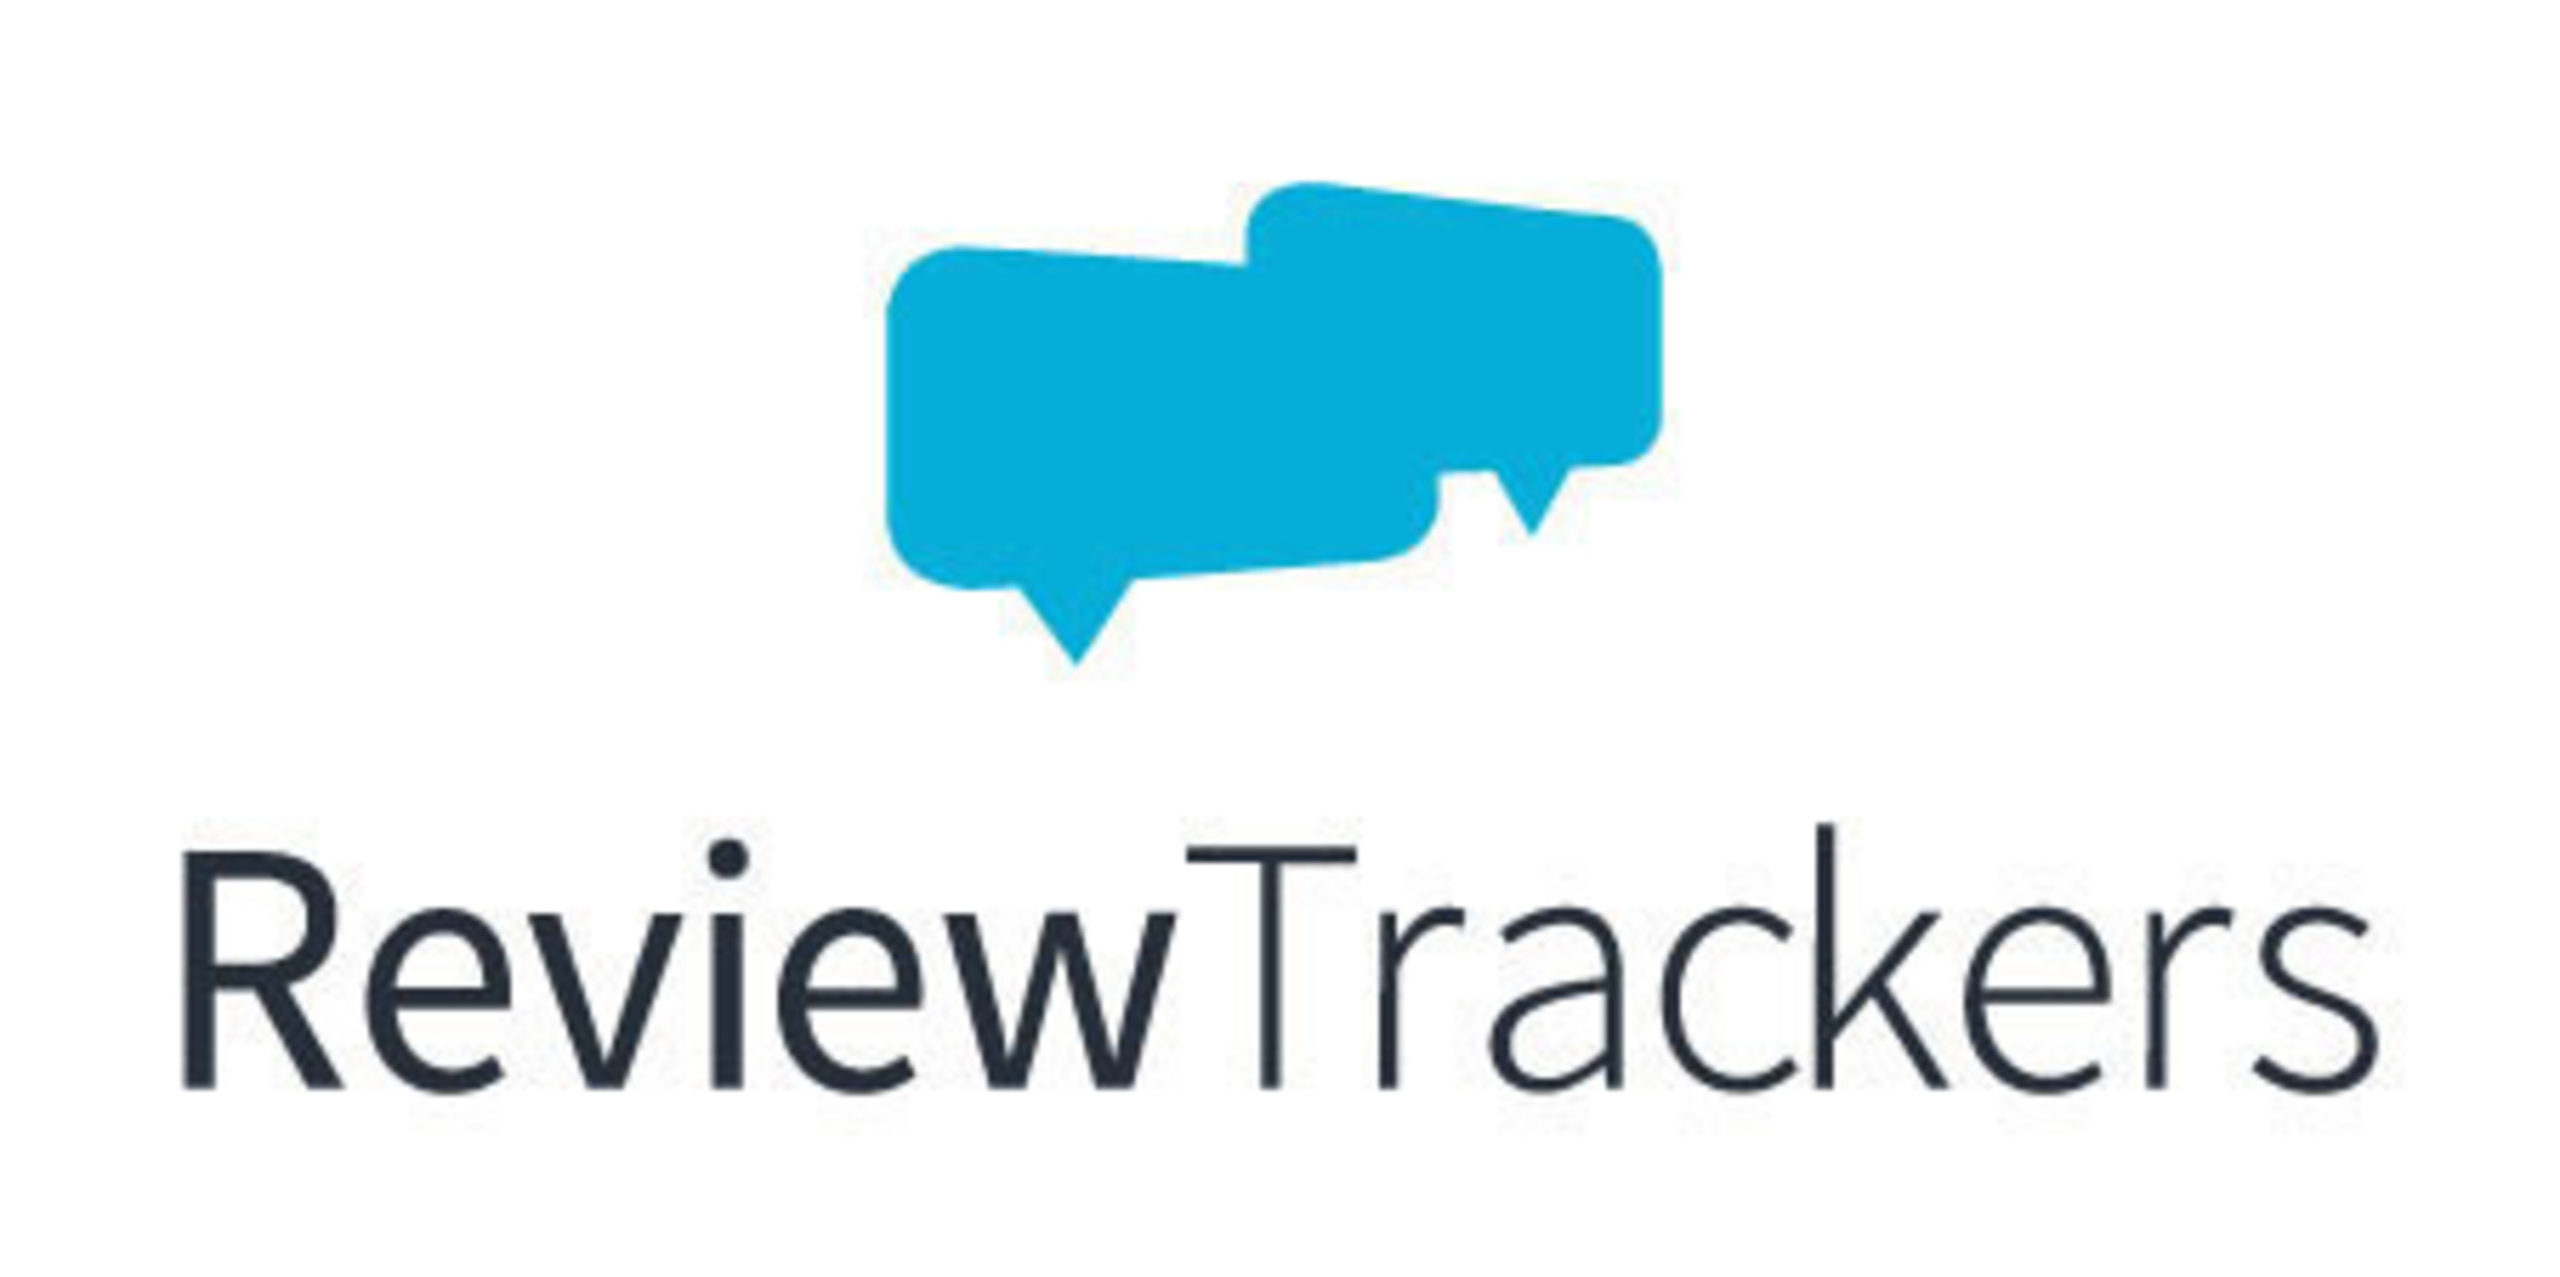 ReviewTrackers Logo